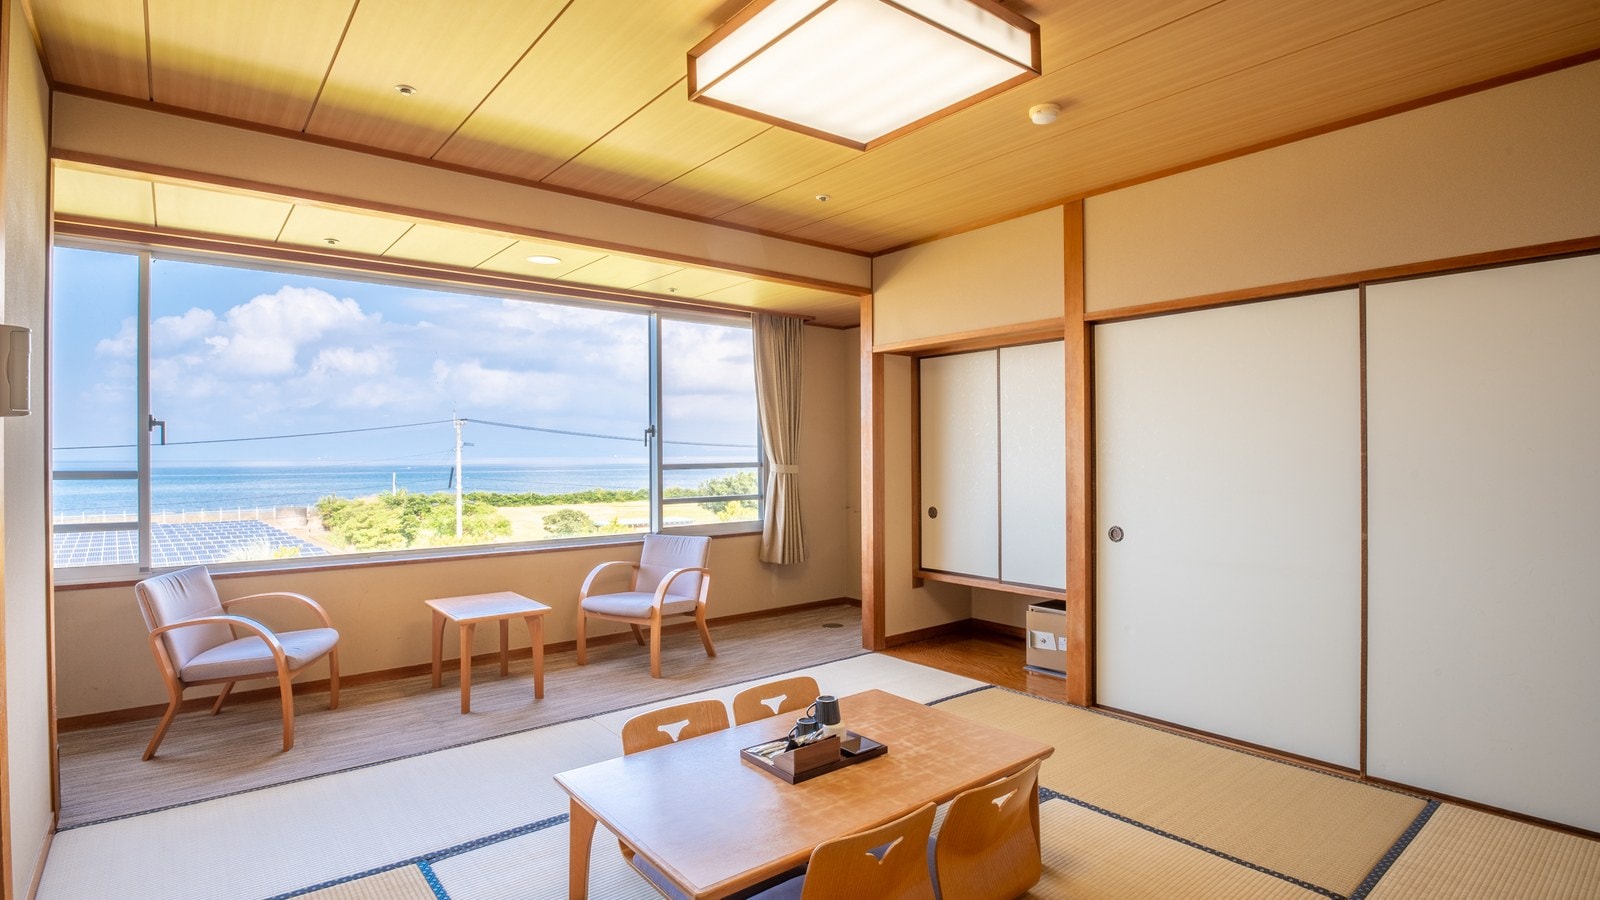 Main building Japanese-style room 8 tatami mats